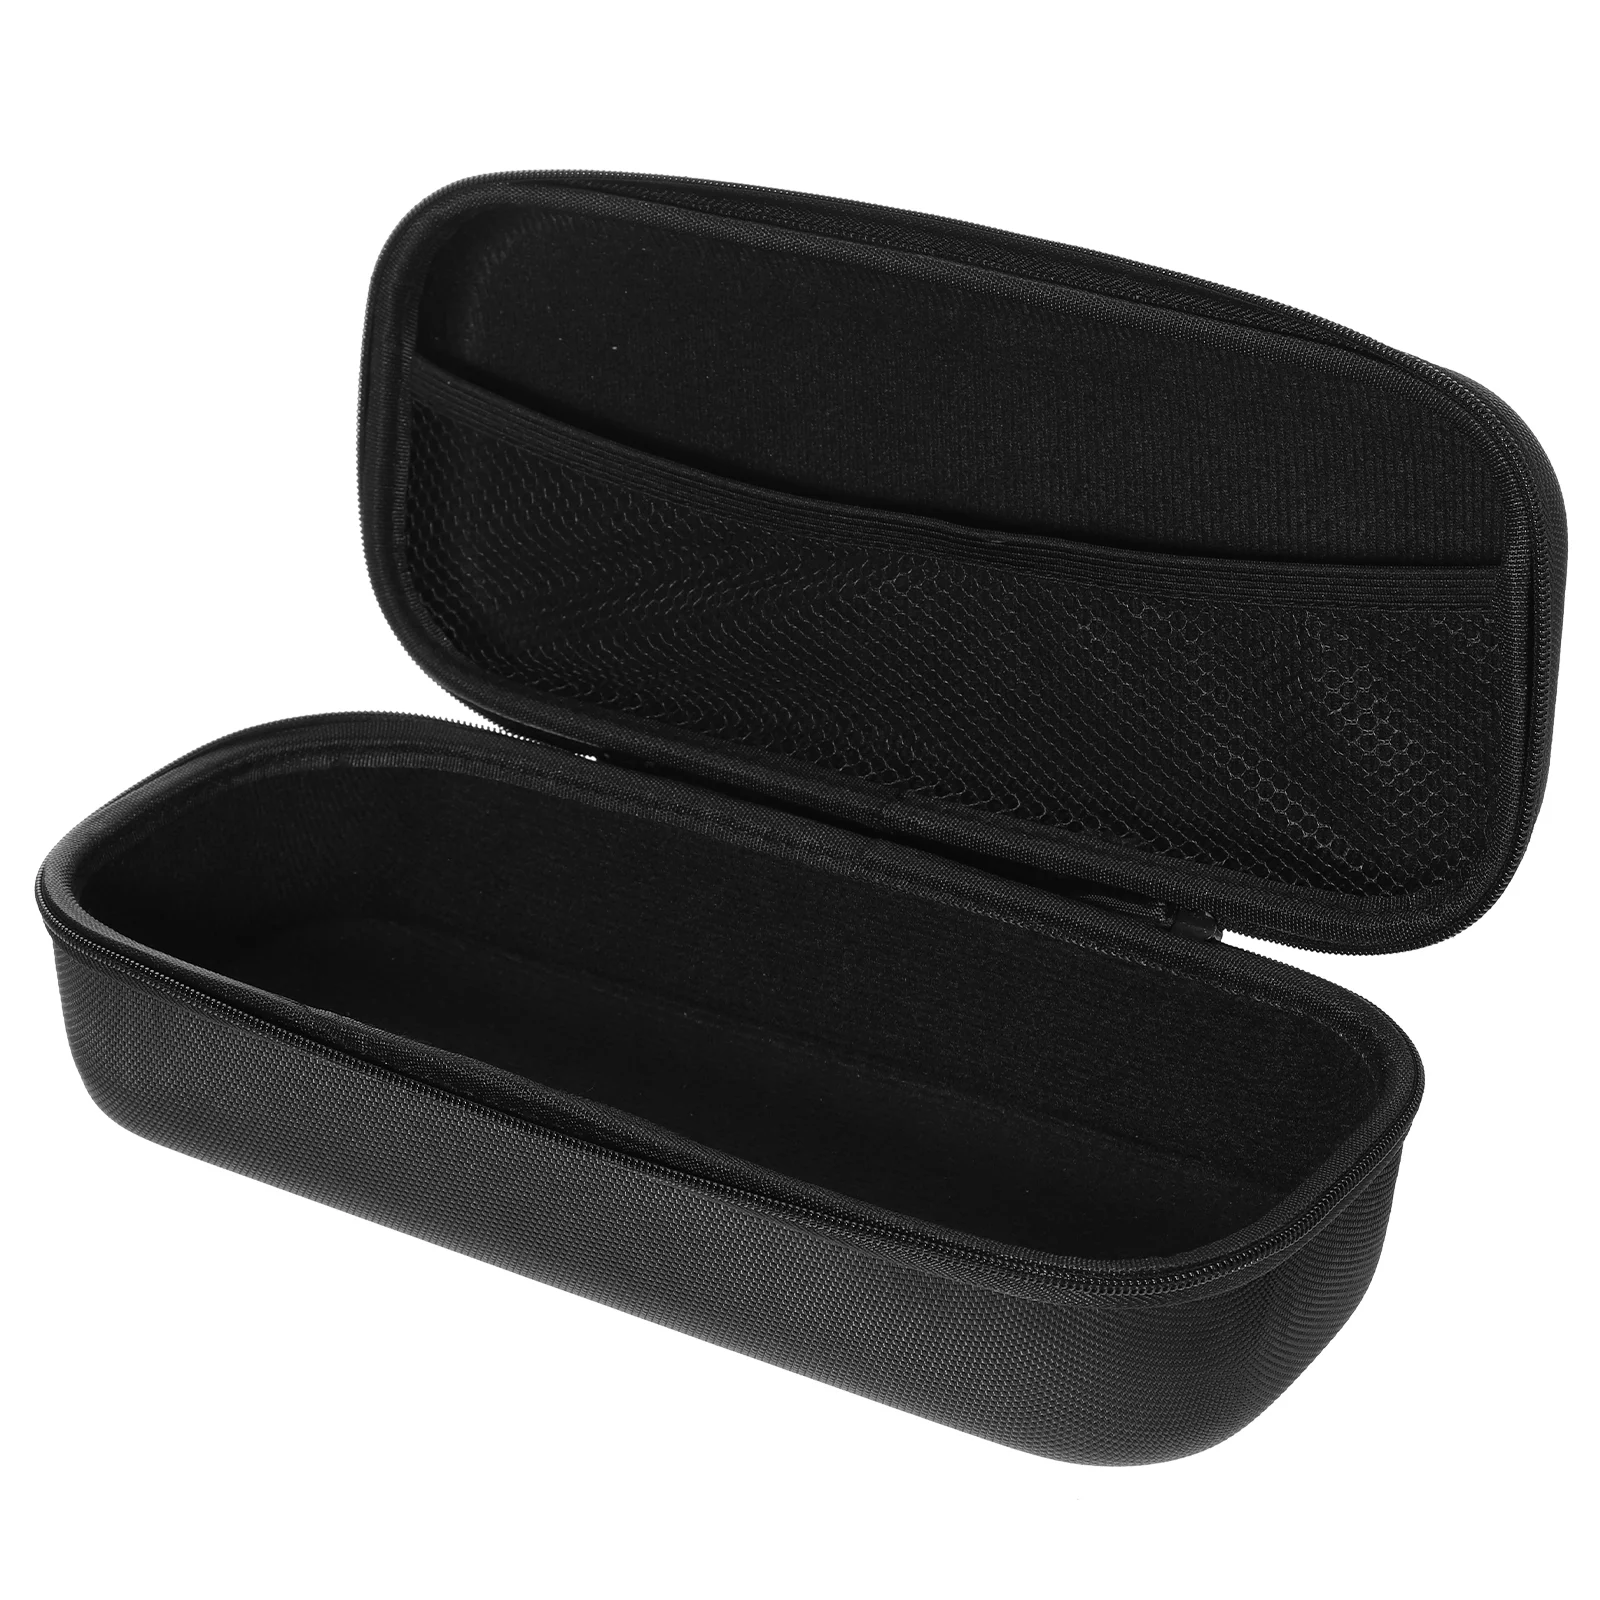 Microphone Storage Bag Carrying Waterproof Cases Portable Handbag Simple Handheld Pouch Organizer enlarge